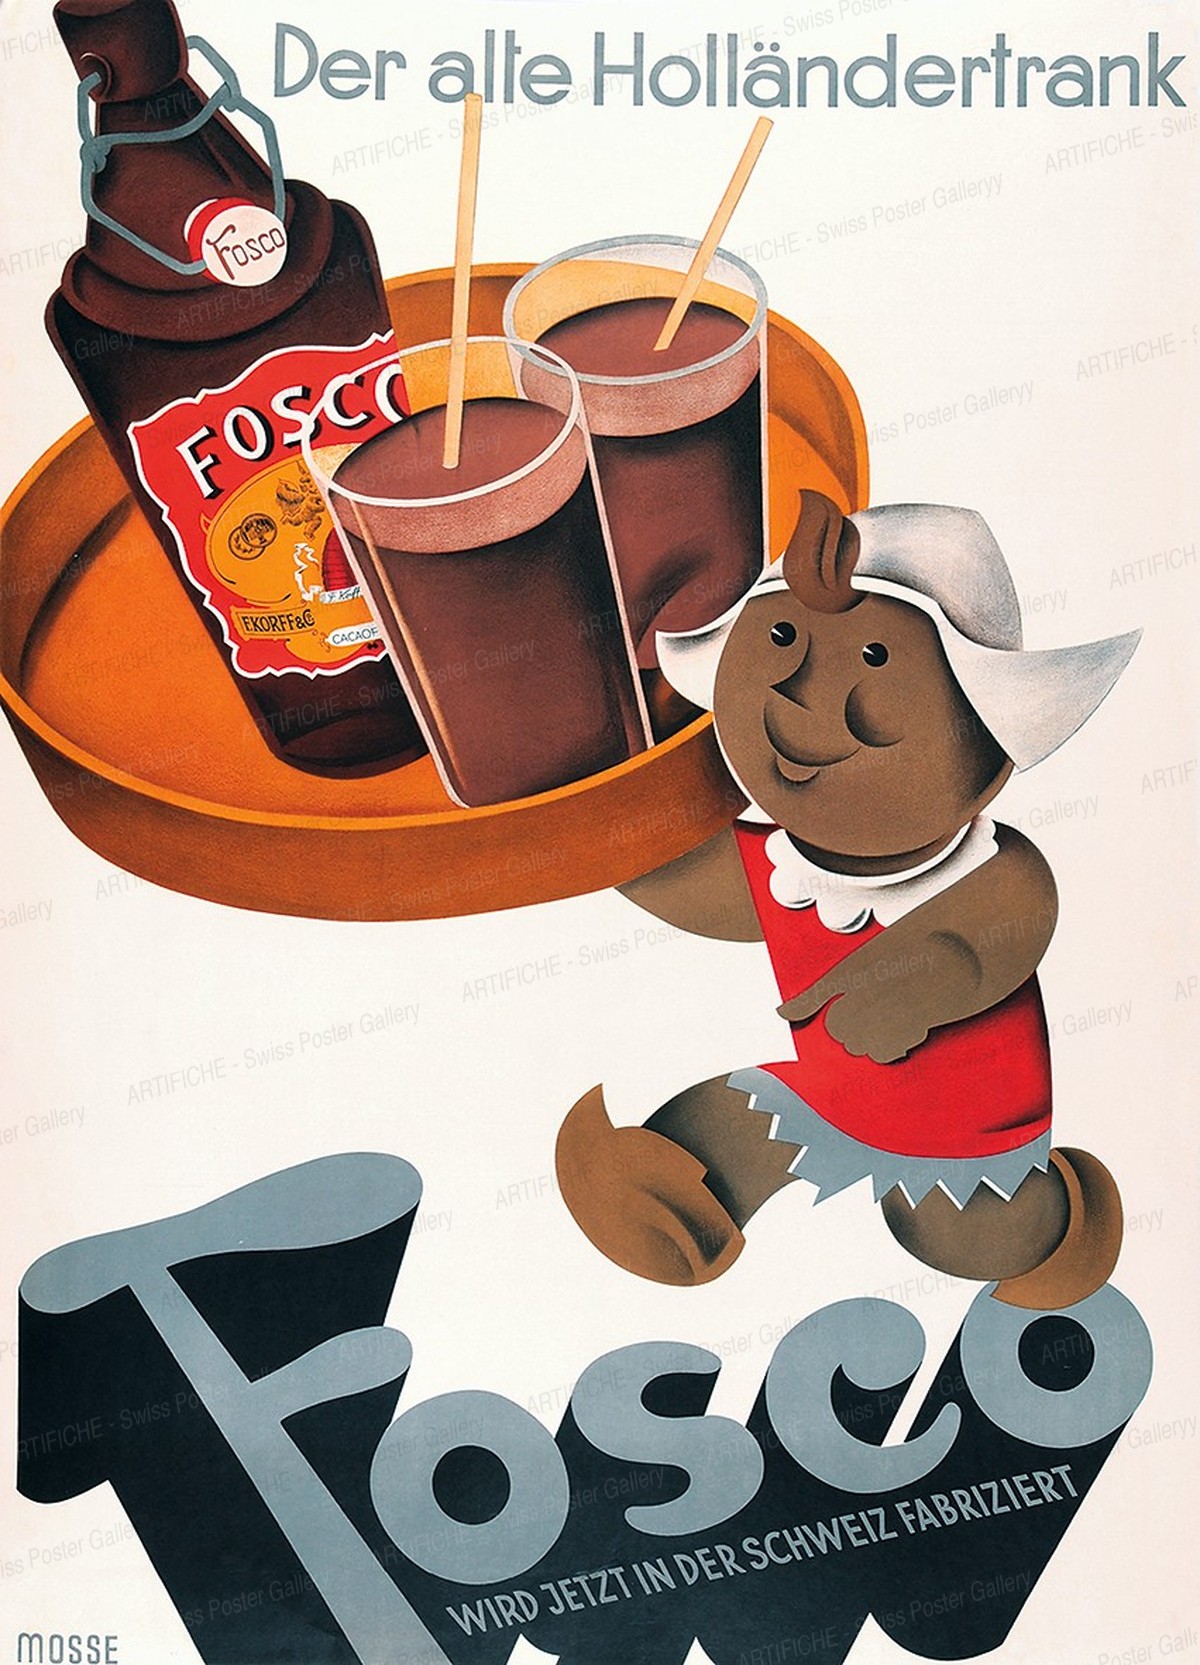 Fosco the old Dutch drink, Mosse